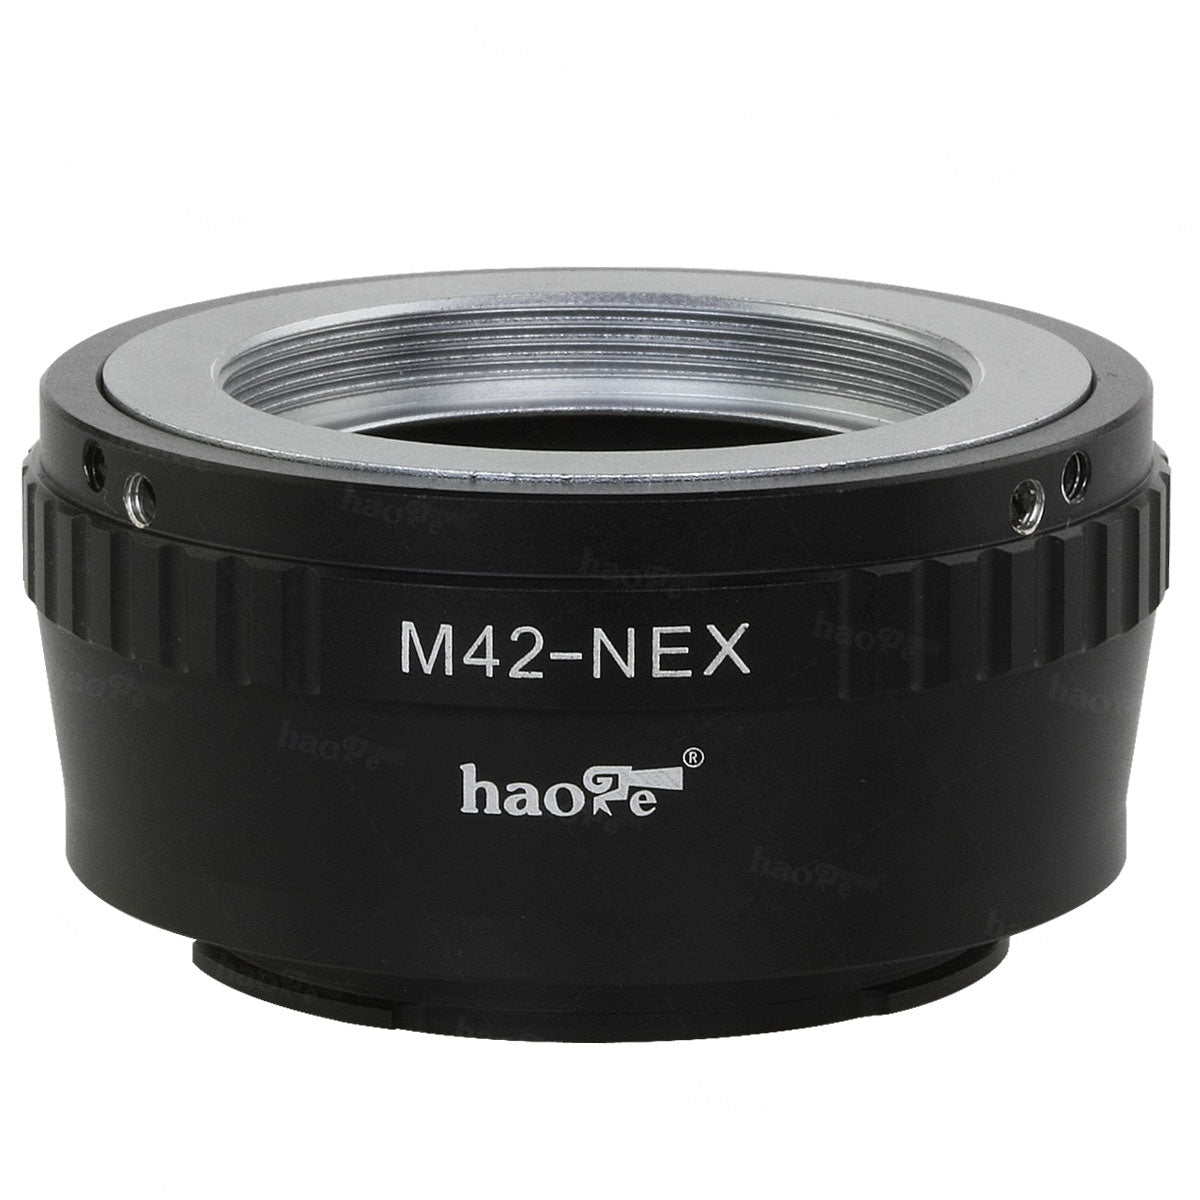 Haoge Lens Mount Adapter for 42mm M42 Mount Lens to Sony E-mount NEX Camera such as NEX-3, NEX-5, NEX-5N, NEX-7, NEX-7N, NEX-C3, NEX-F3, a6300, a6000, a5000, a3500, a3000, NEX-VG10, VG20 Copper